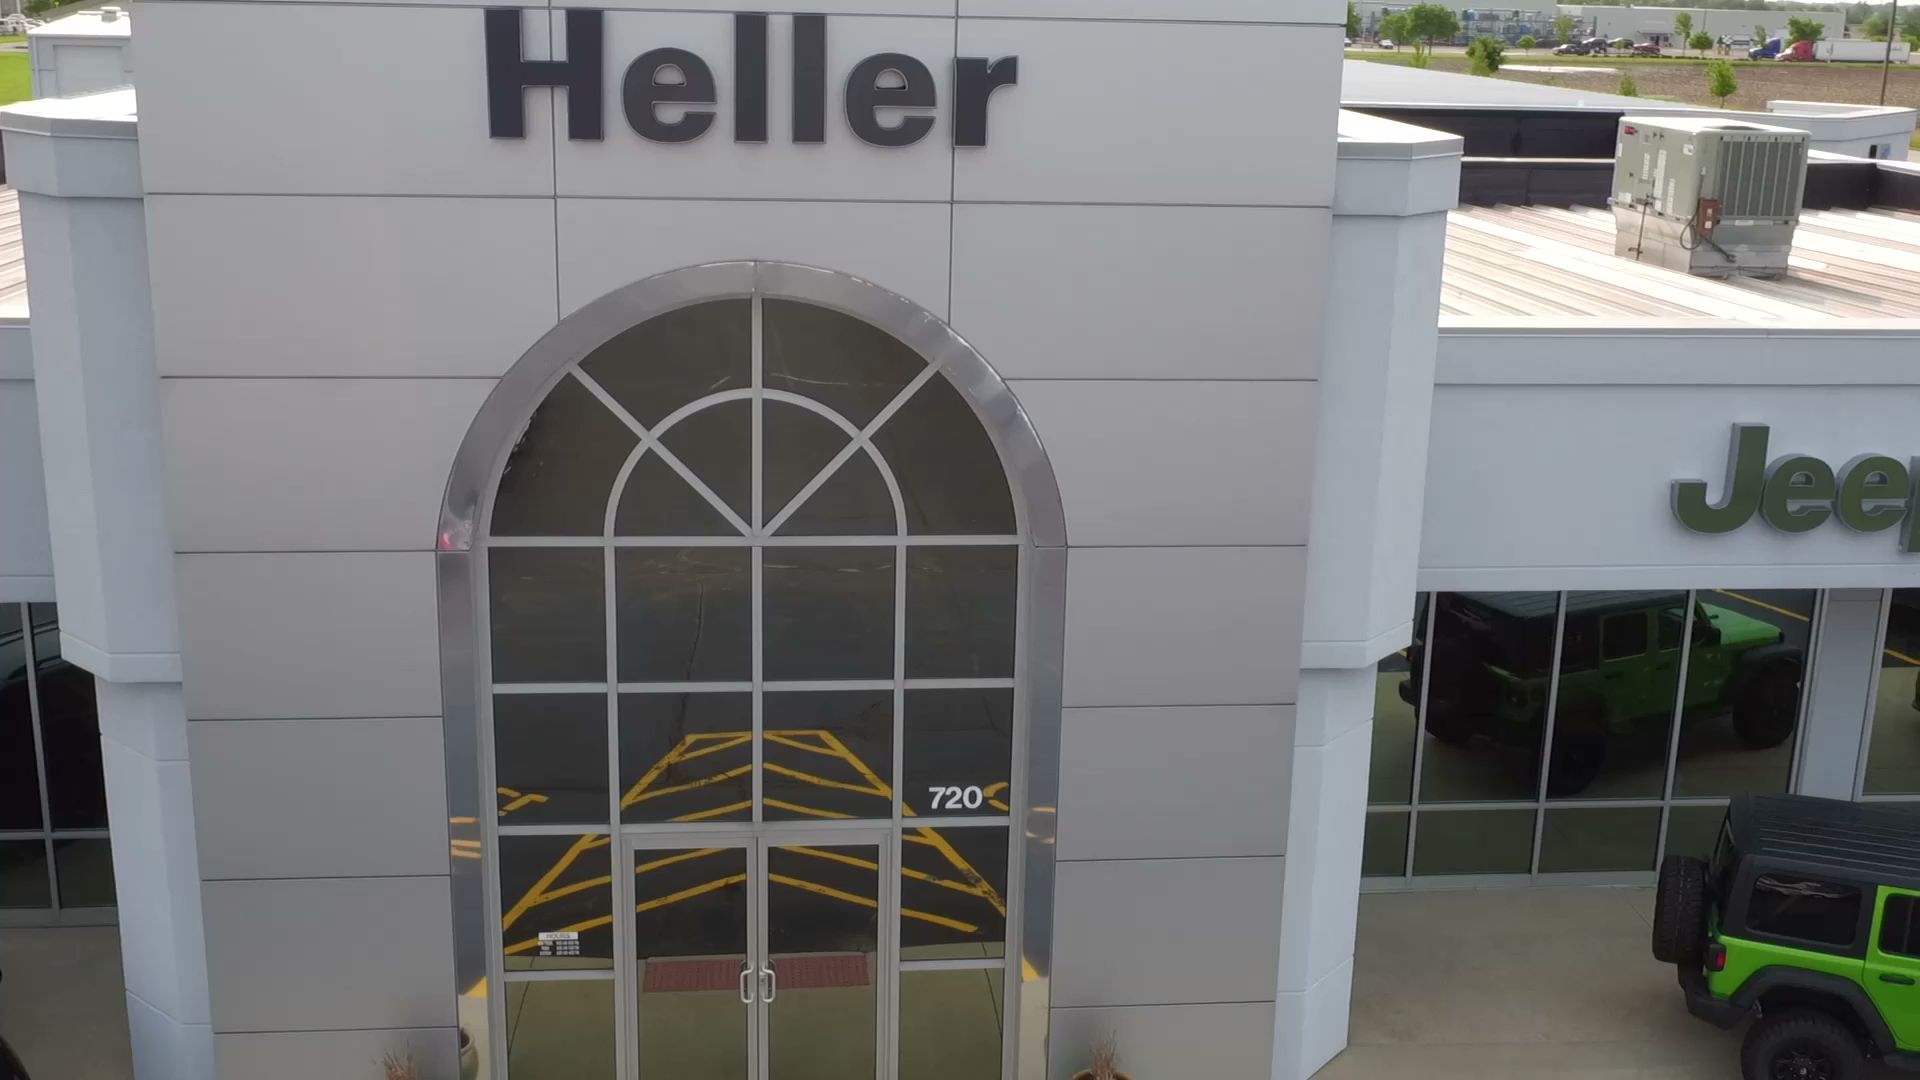 Heller Motors 720 S Deerfield Rd, Pontiac Illinois 61764